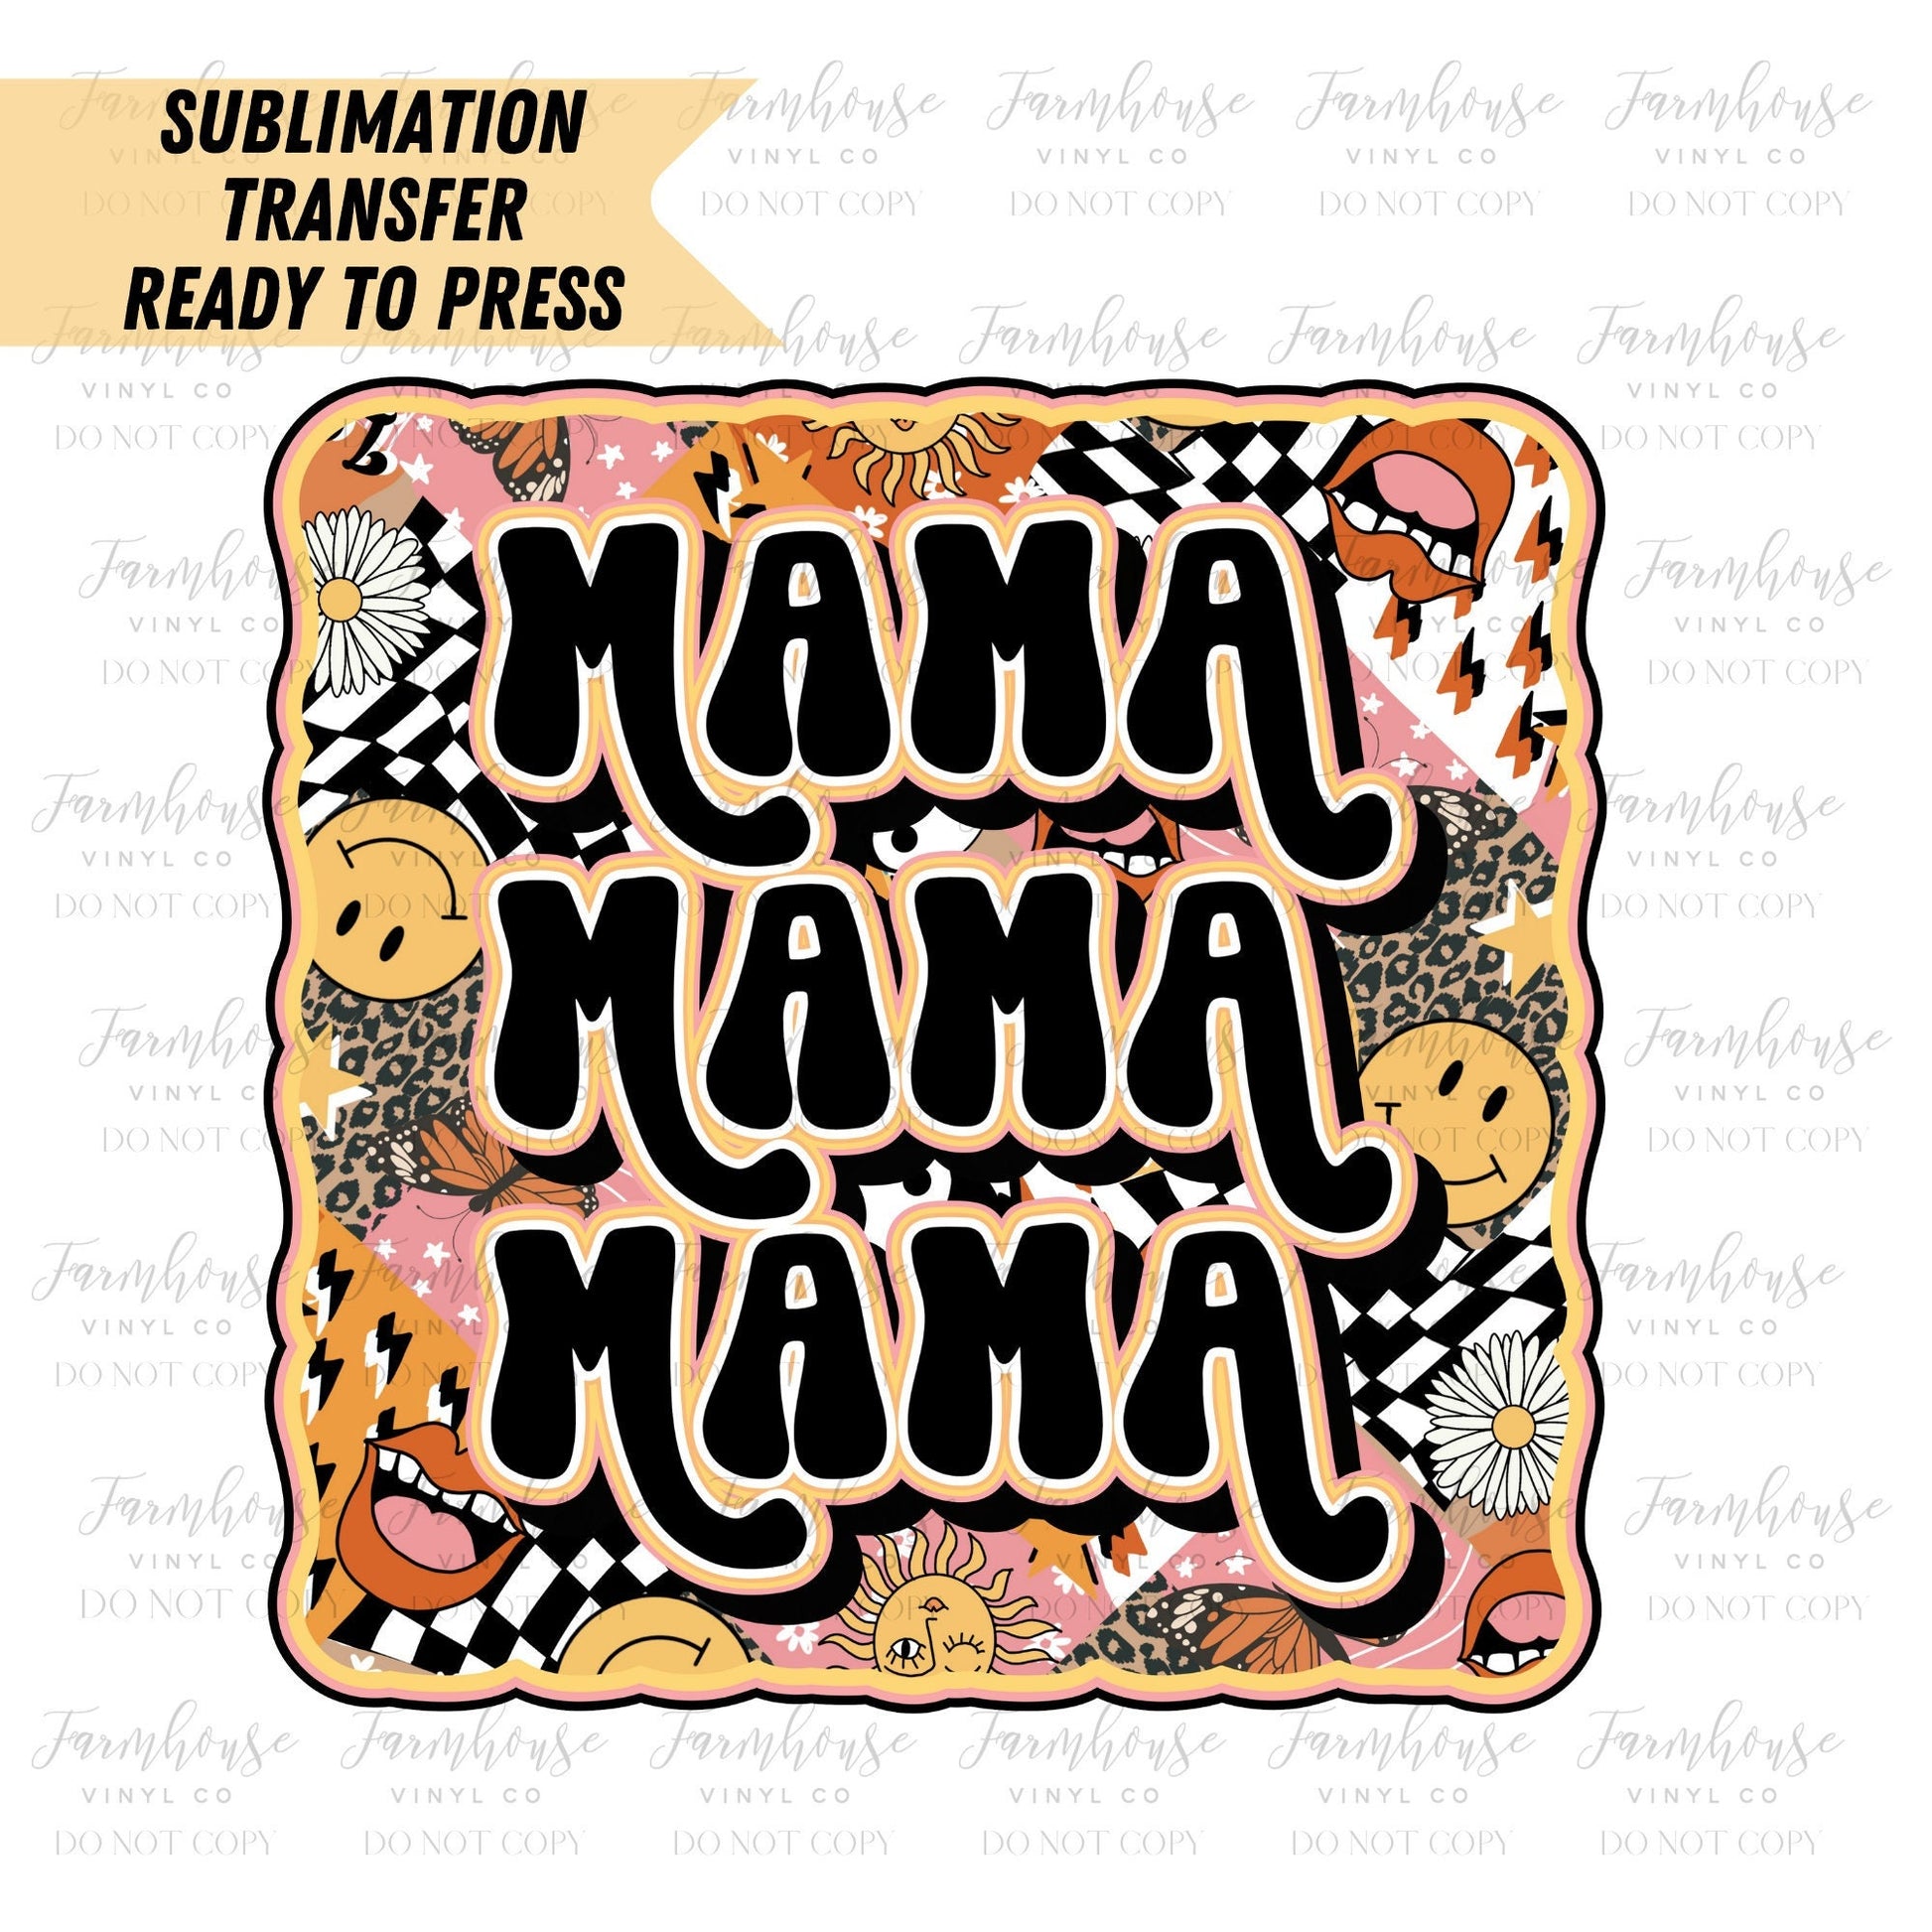 Mama Retro Square Smiley Face Rocker Ready to Press Sublimation Transfer - Farmhouse Vinyl Co